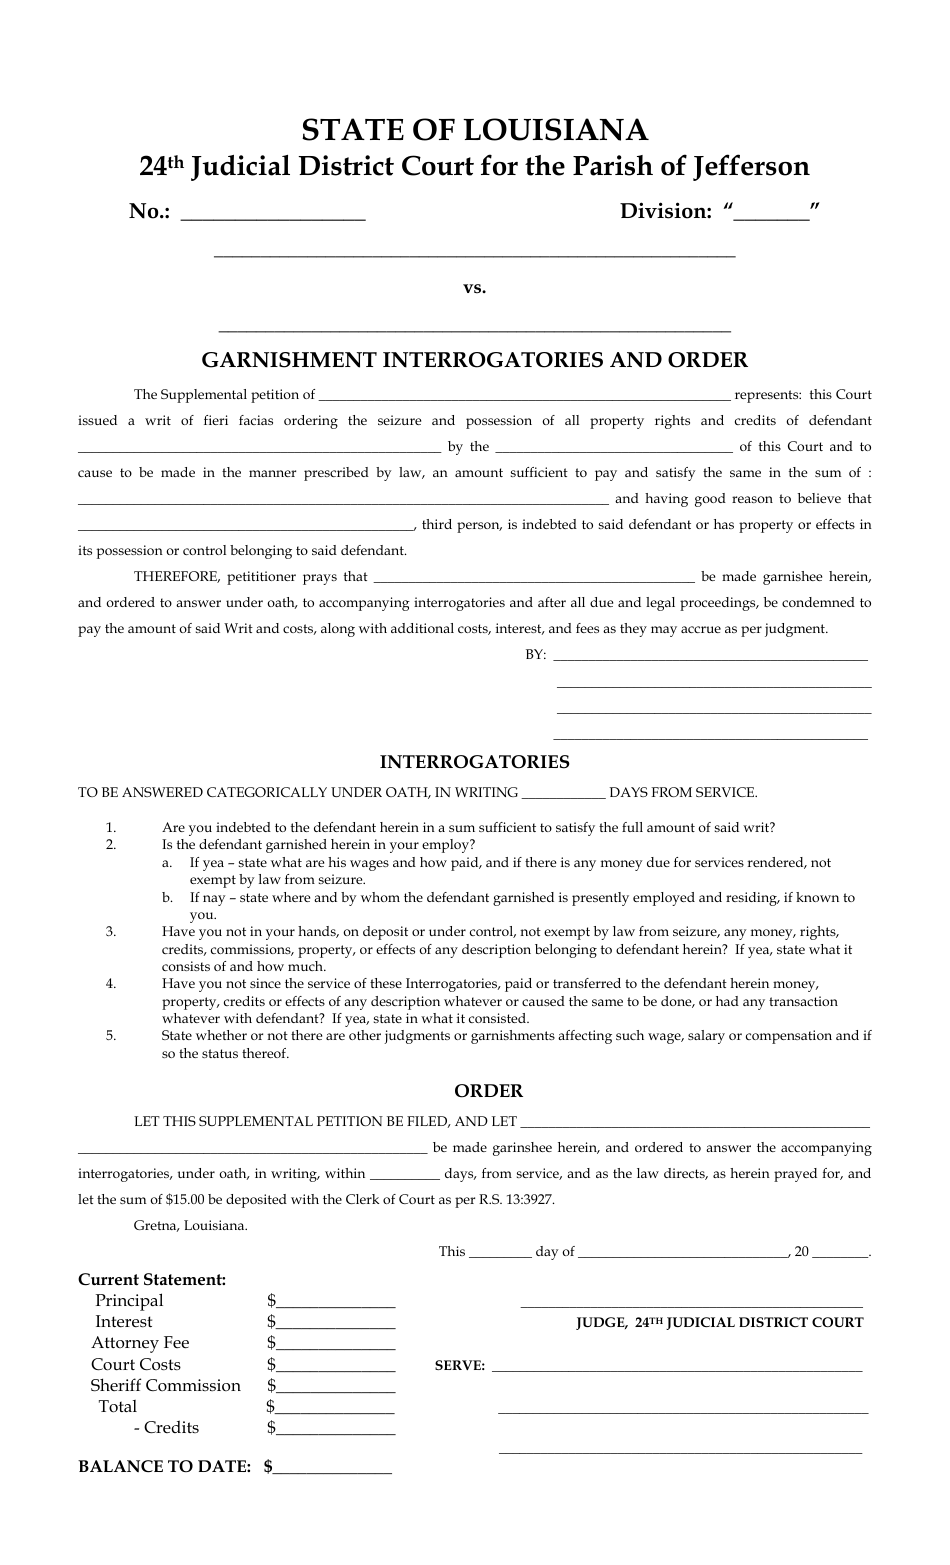 Garnishment Interrogatories and Order Form - Parish of Jefferson, Louisiana, Page 1